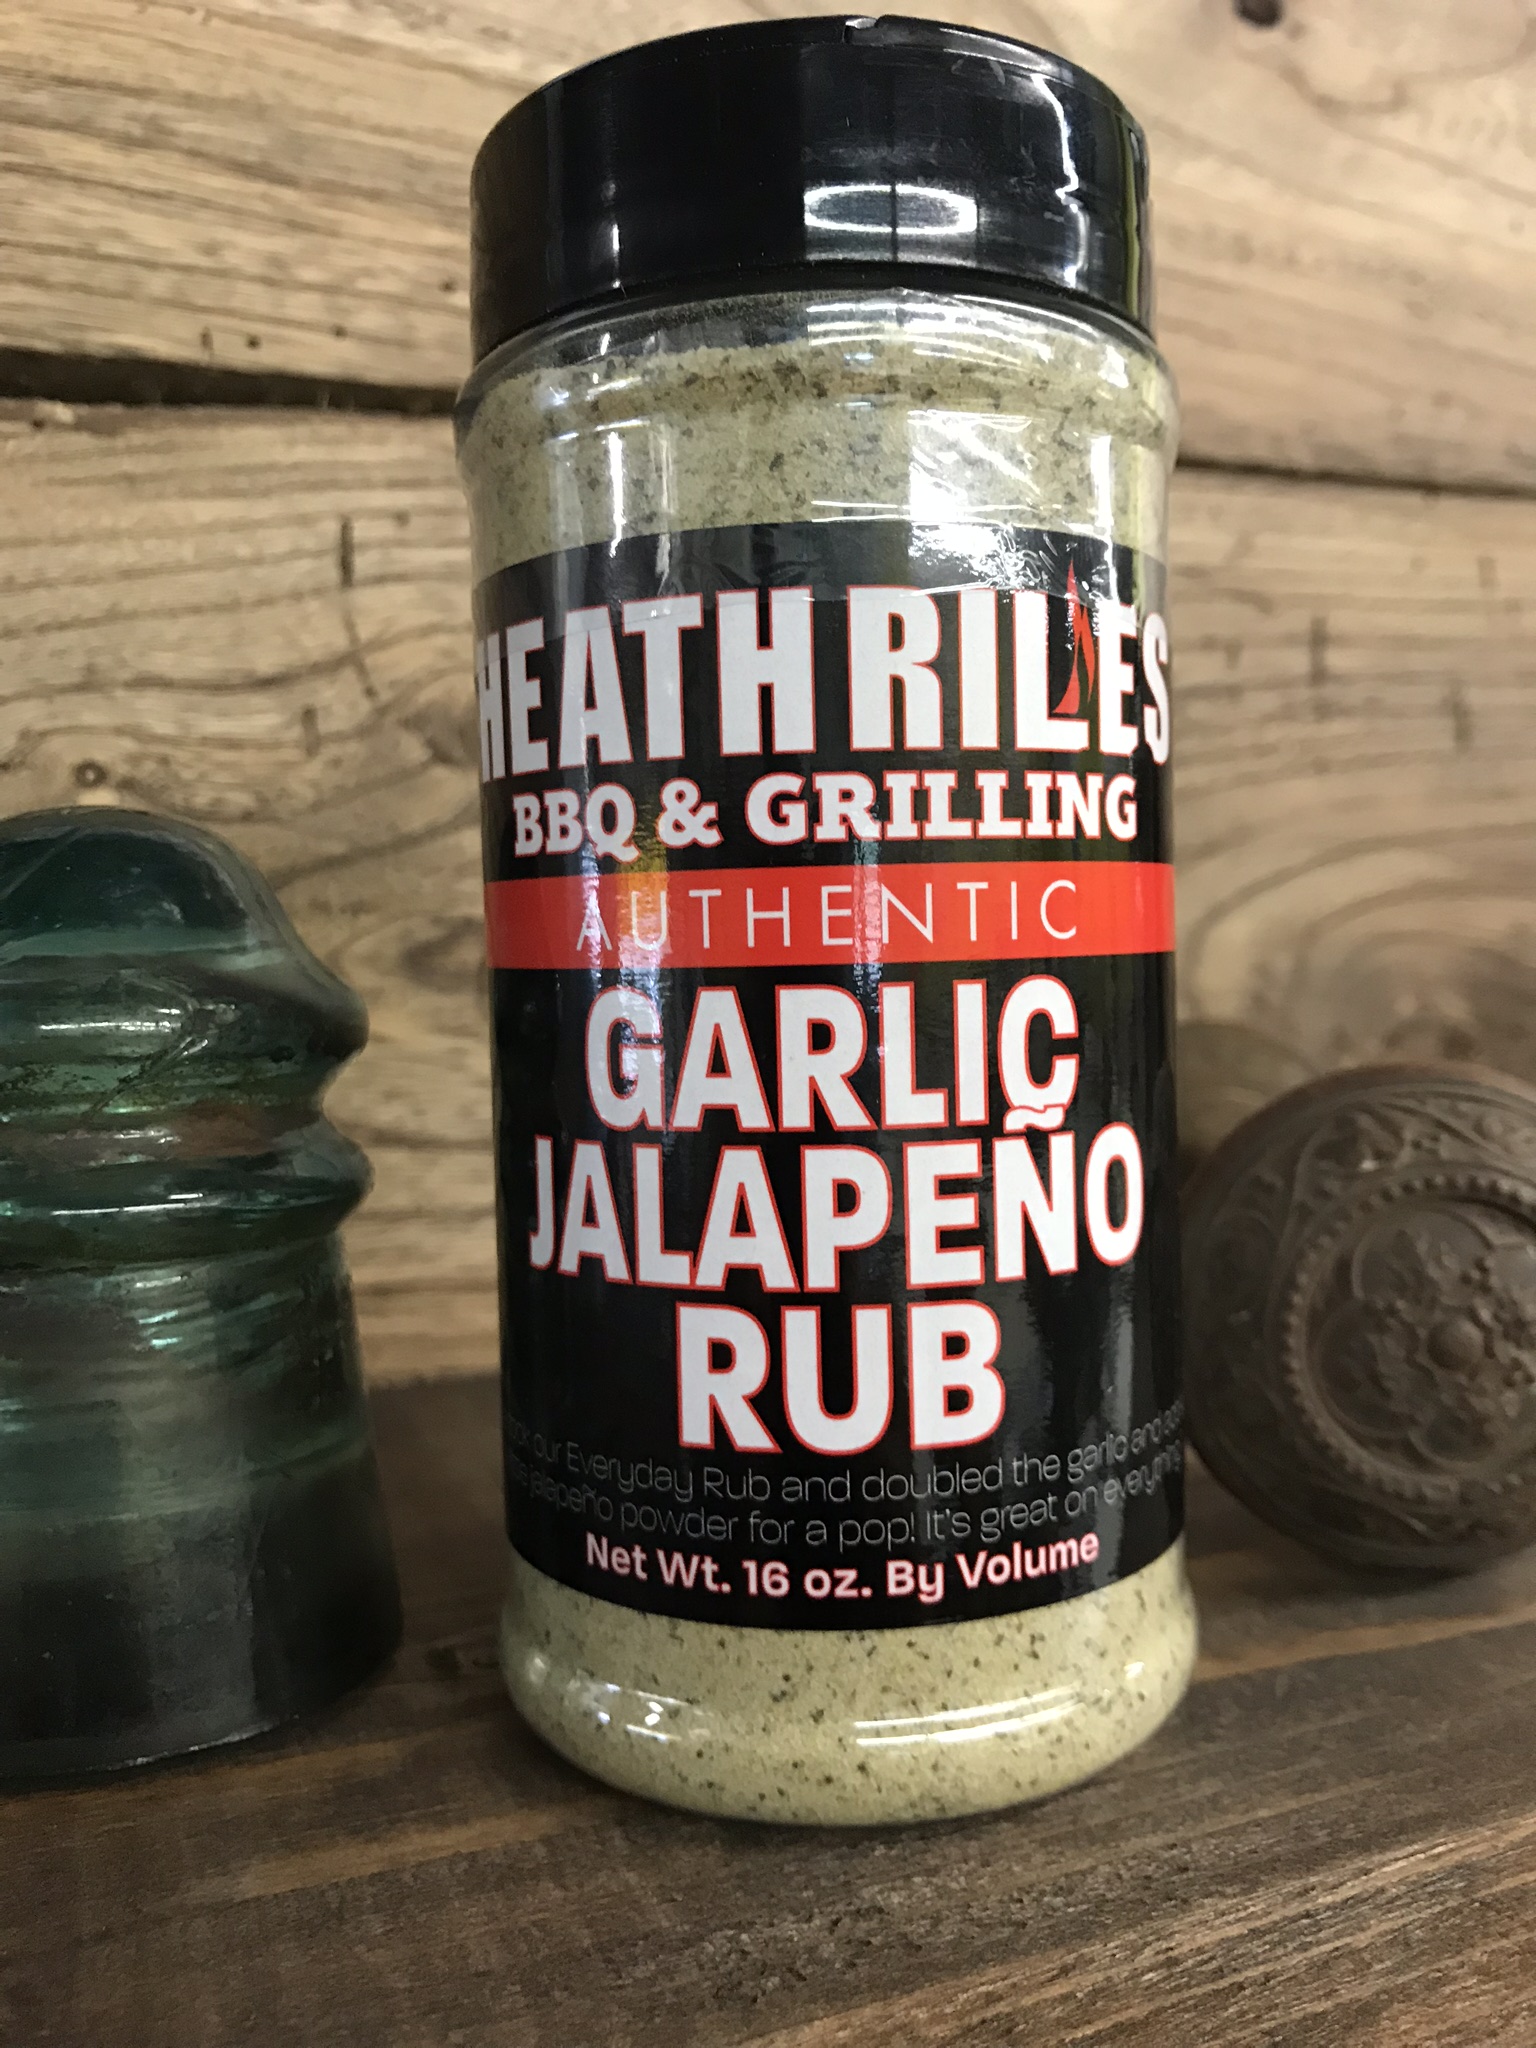 Heath Riles BBQ Garlic Jalapeno rub